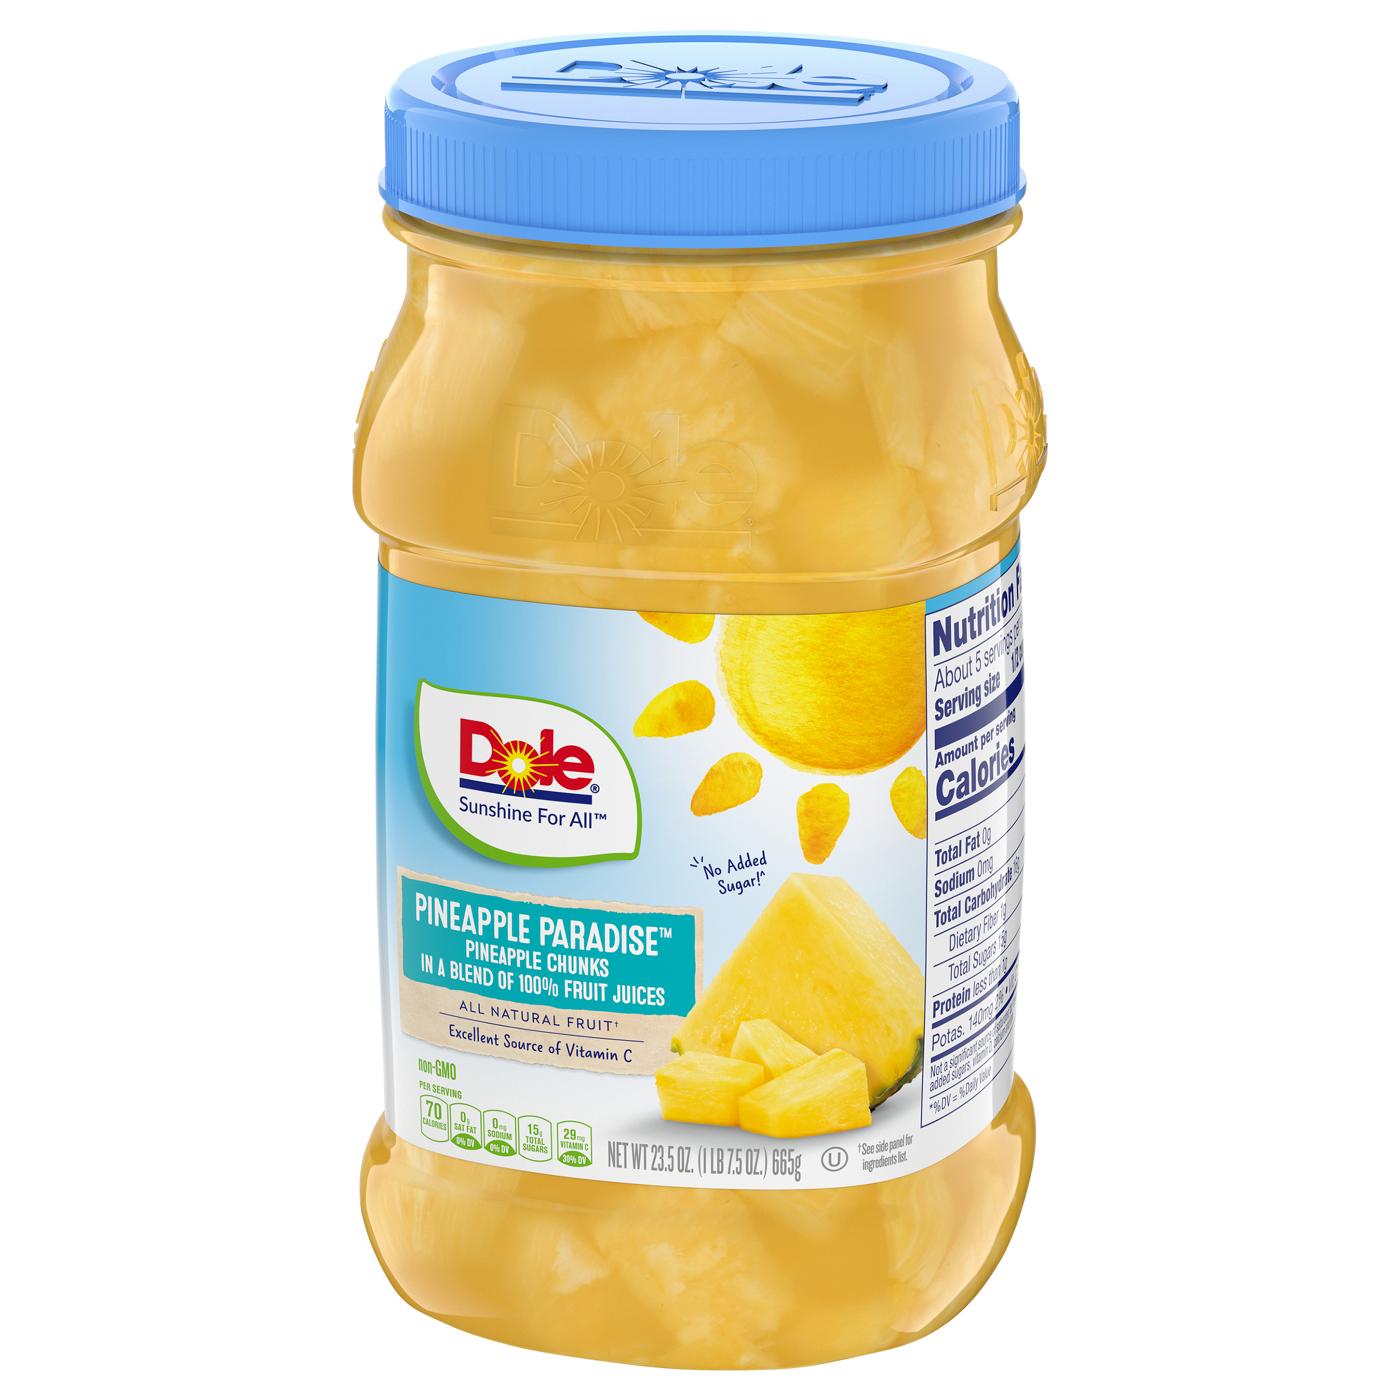 Dole Pineapple Chunks in 100% Fruit Juice Jar; image 2 of 3